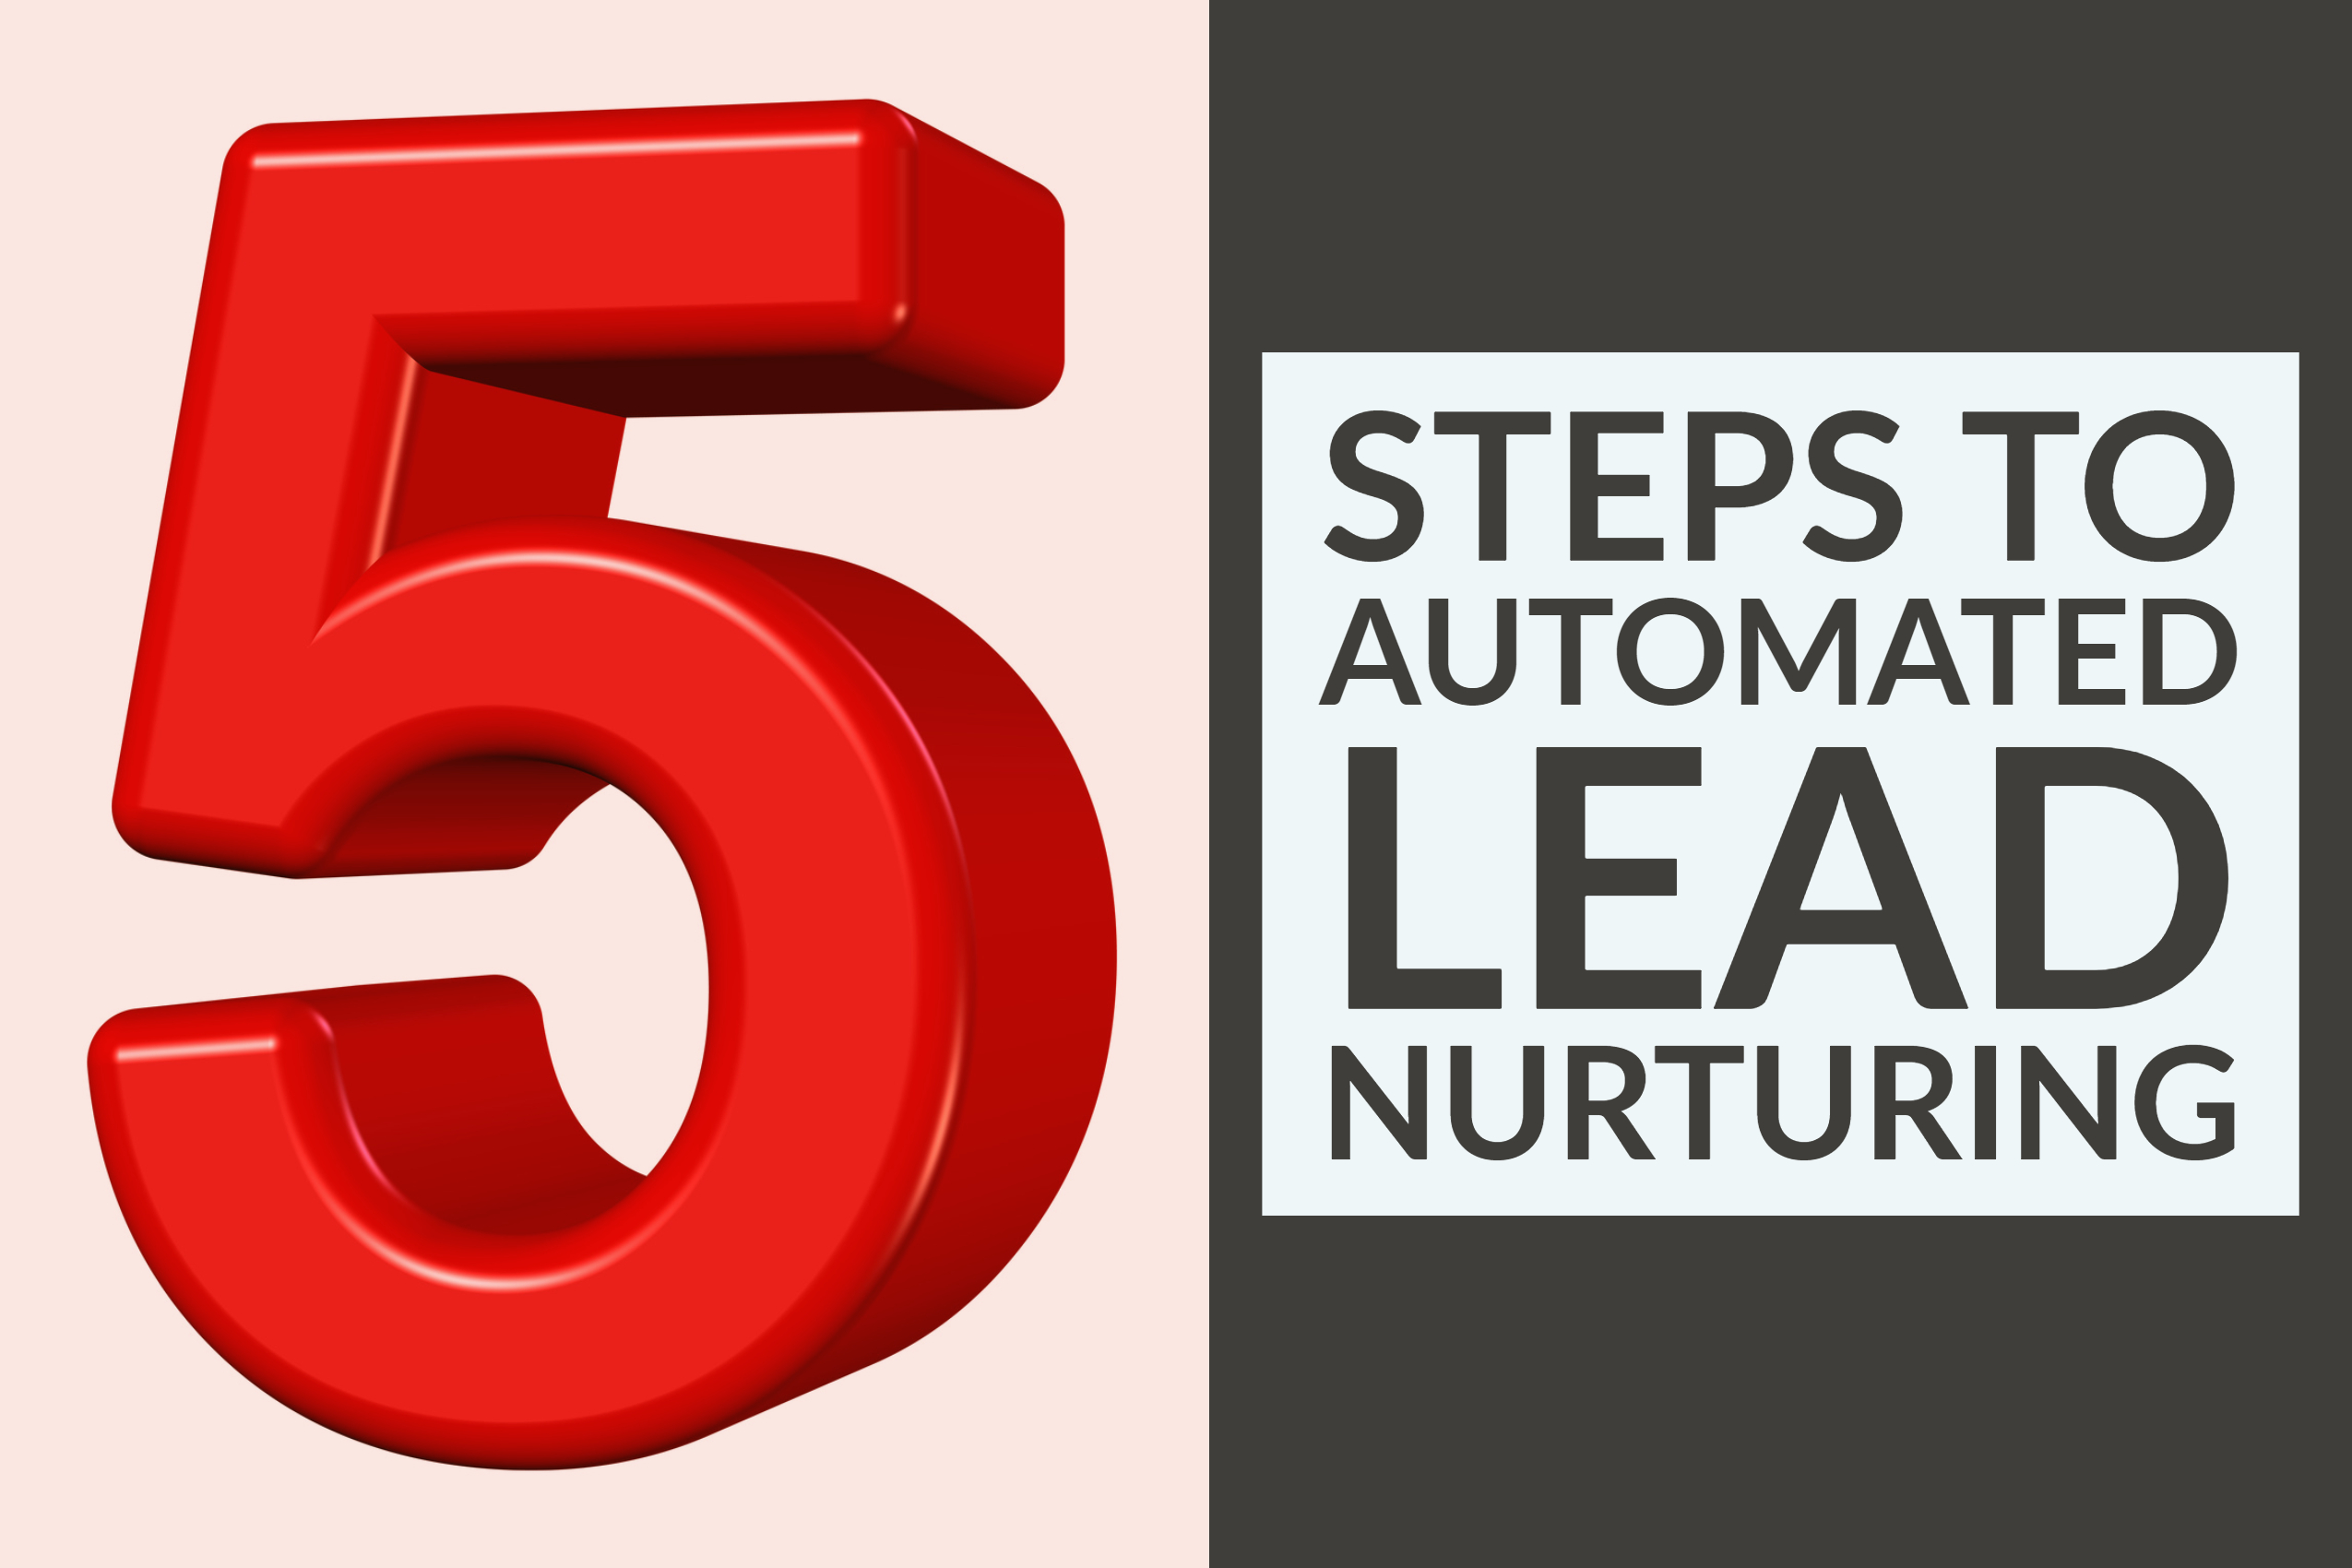 5 Steps To Automated Lead Nurturing